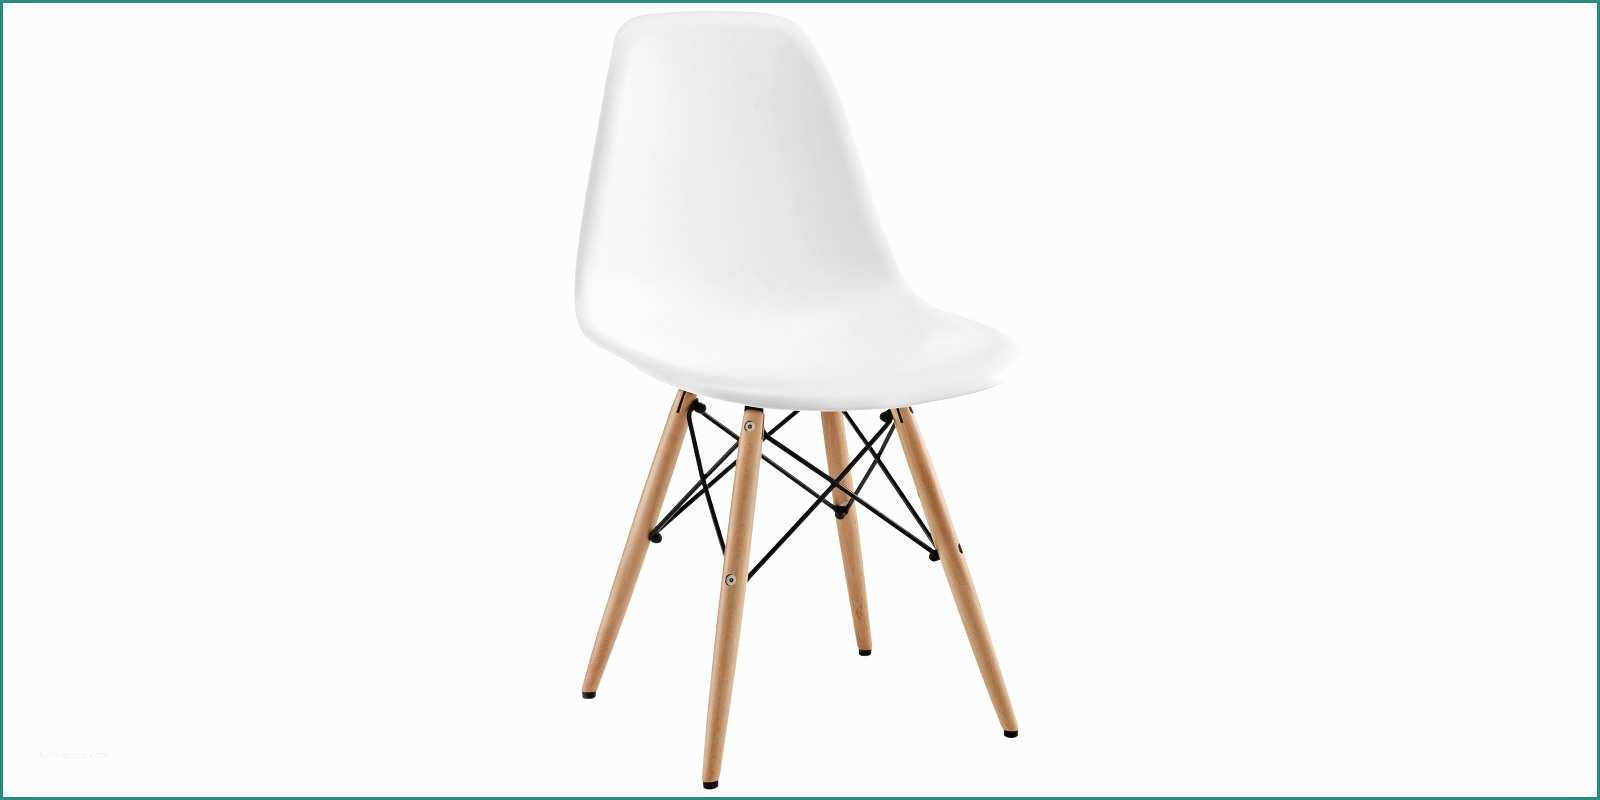 Sedia Eames Replica E Furniture Eames Chair Replica In White Eames Lounge Chair